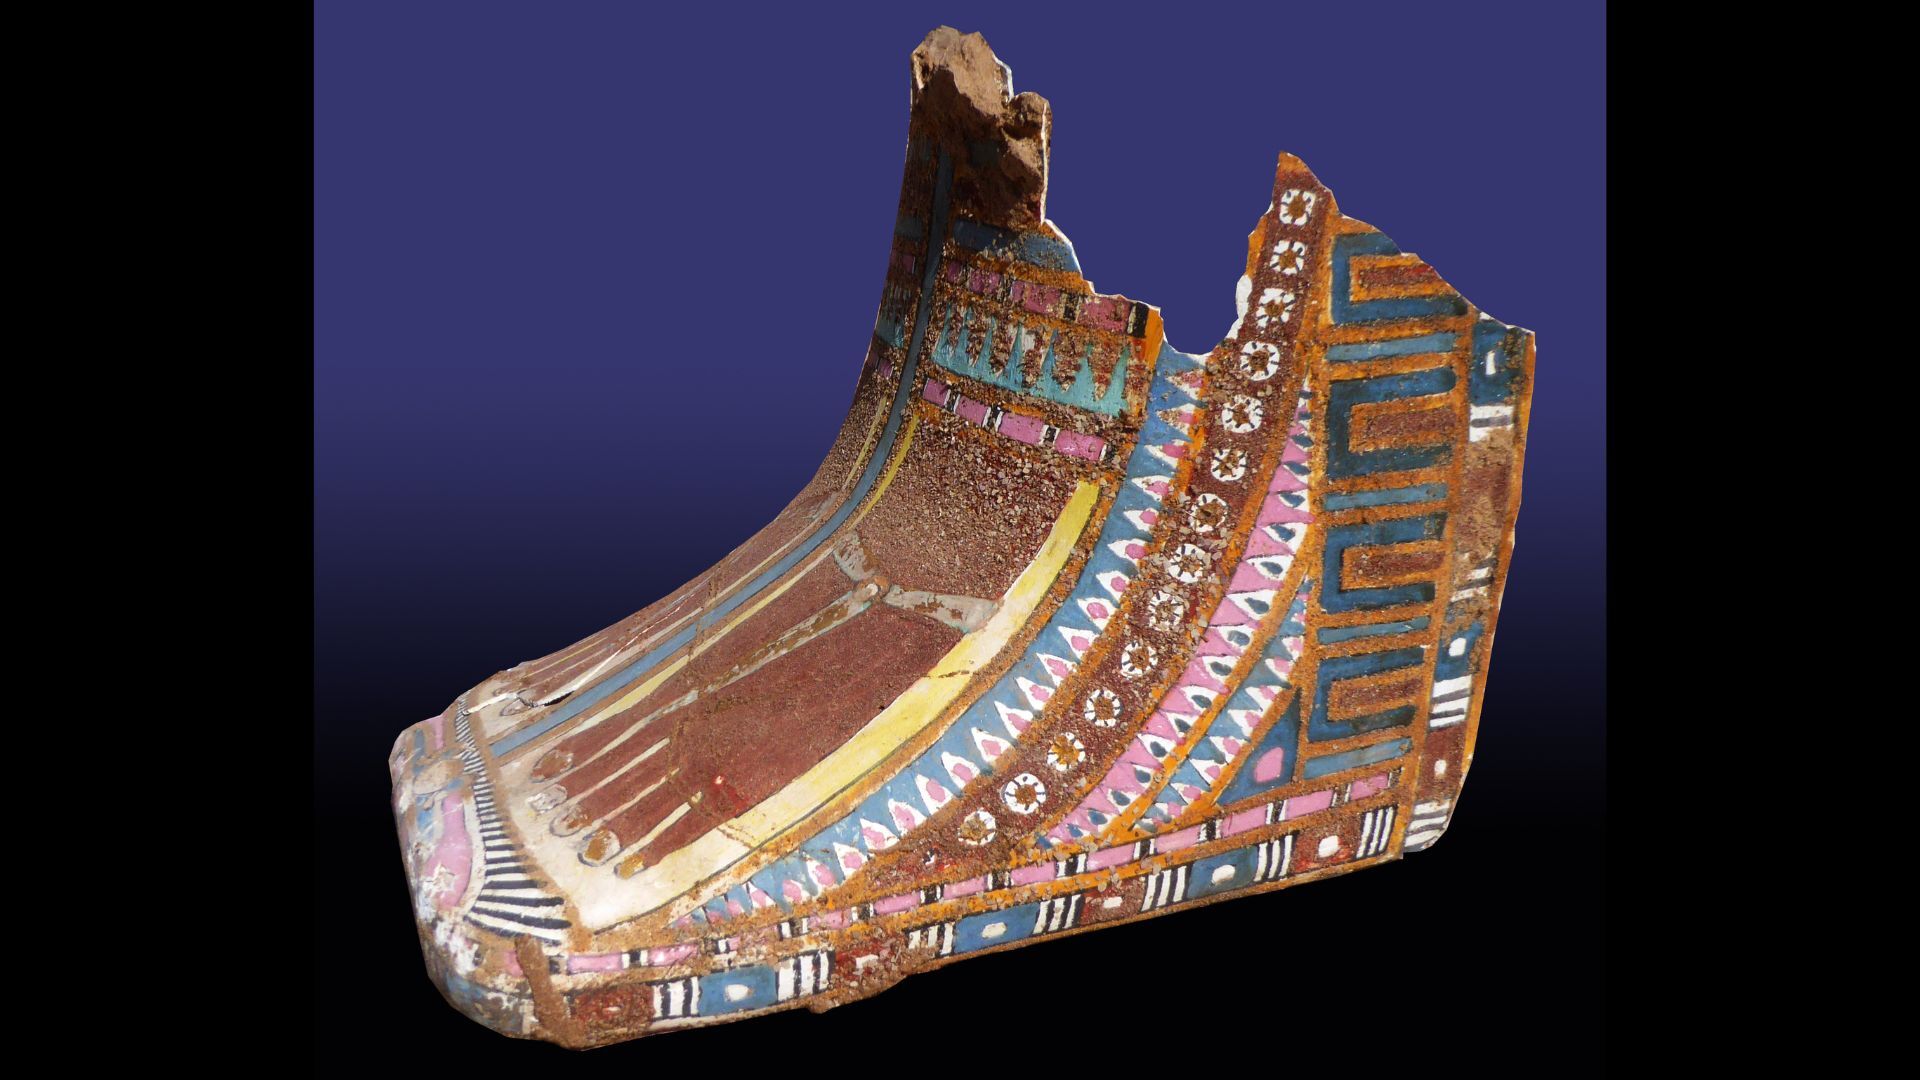 Egyptian artifacts